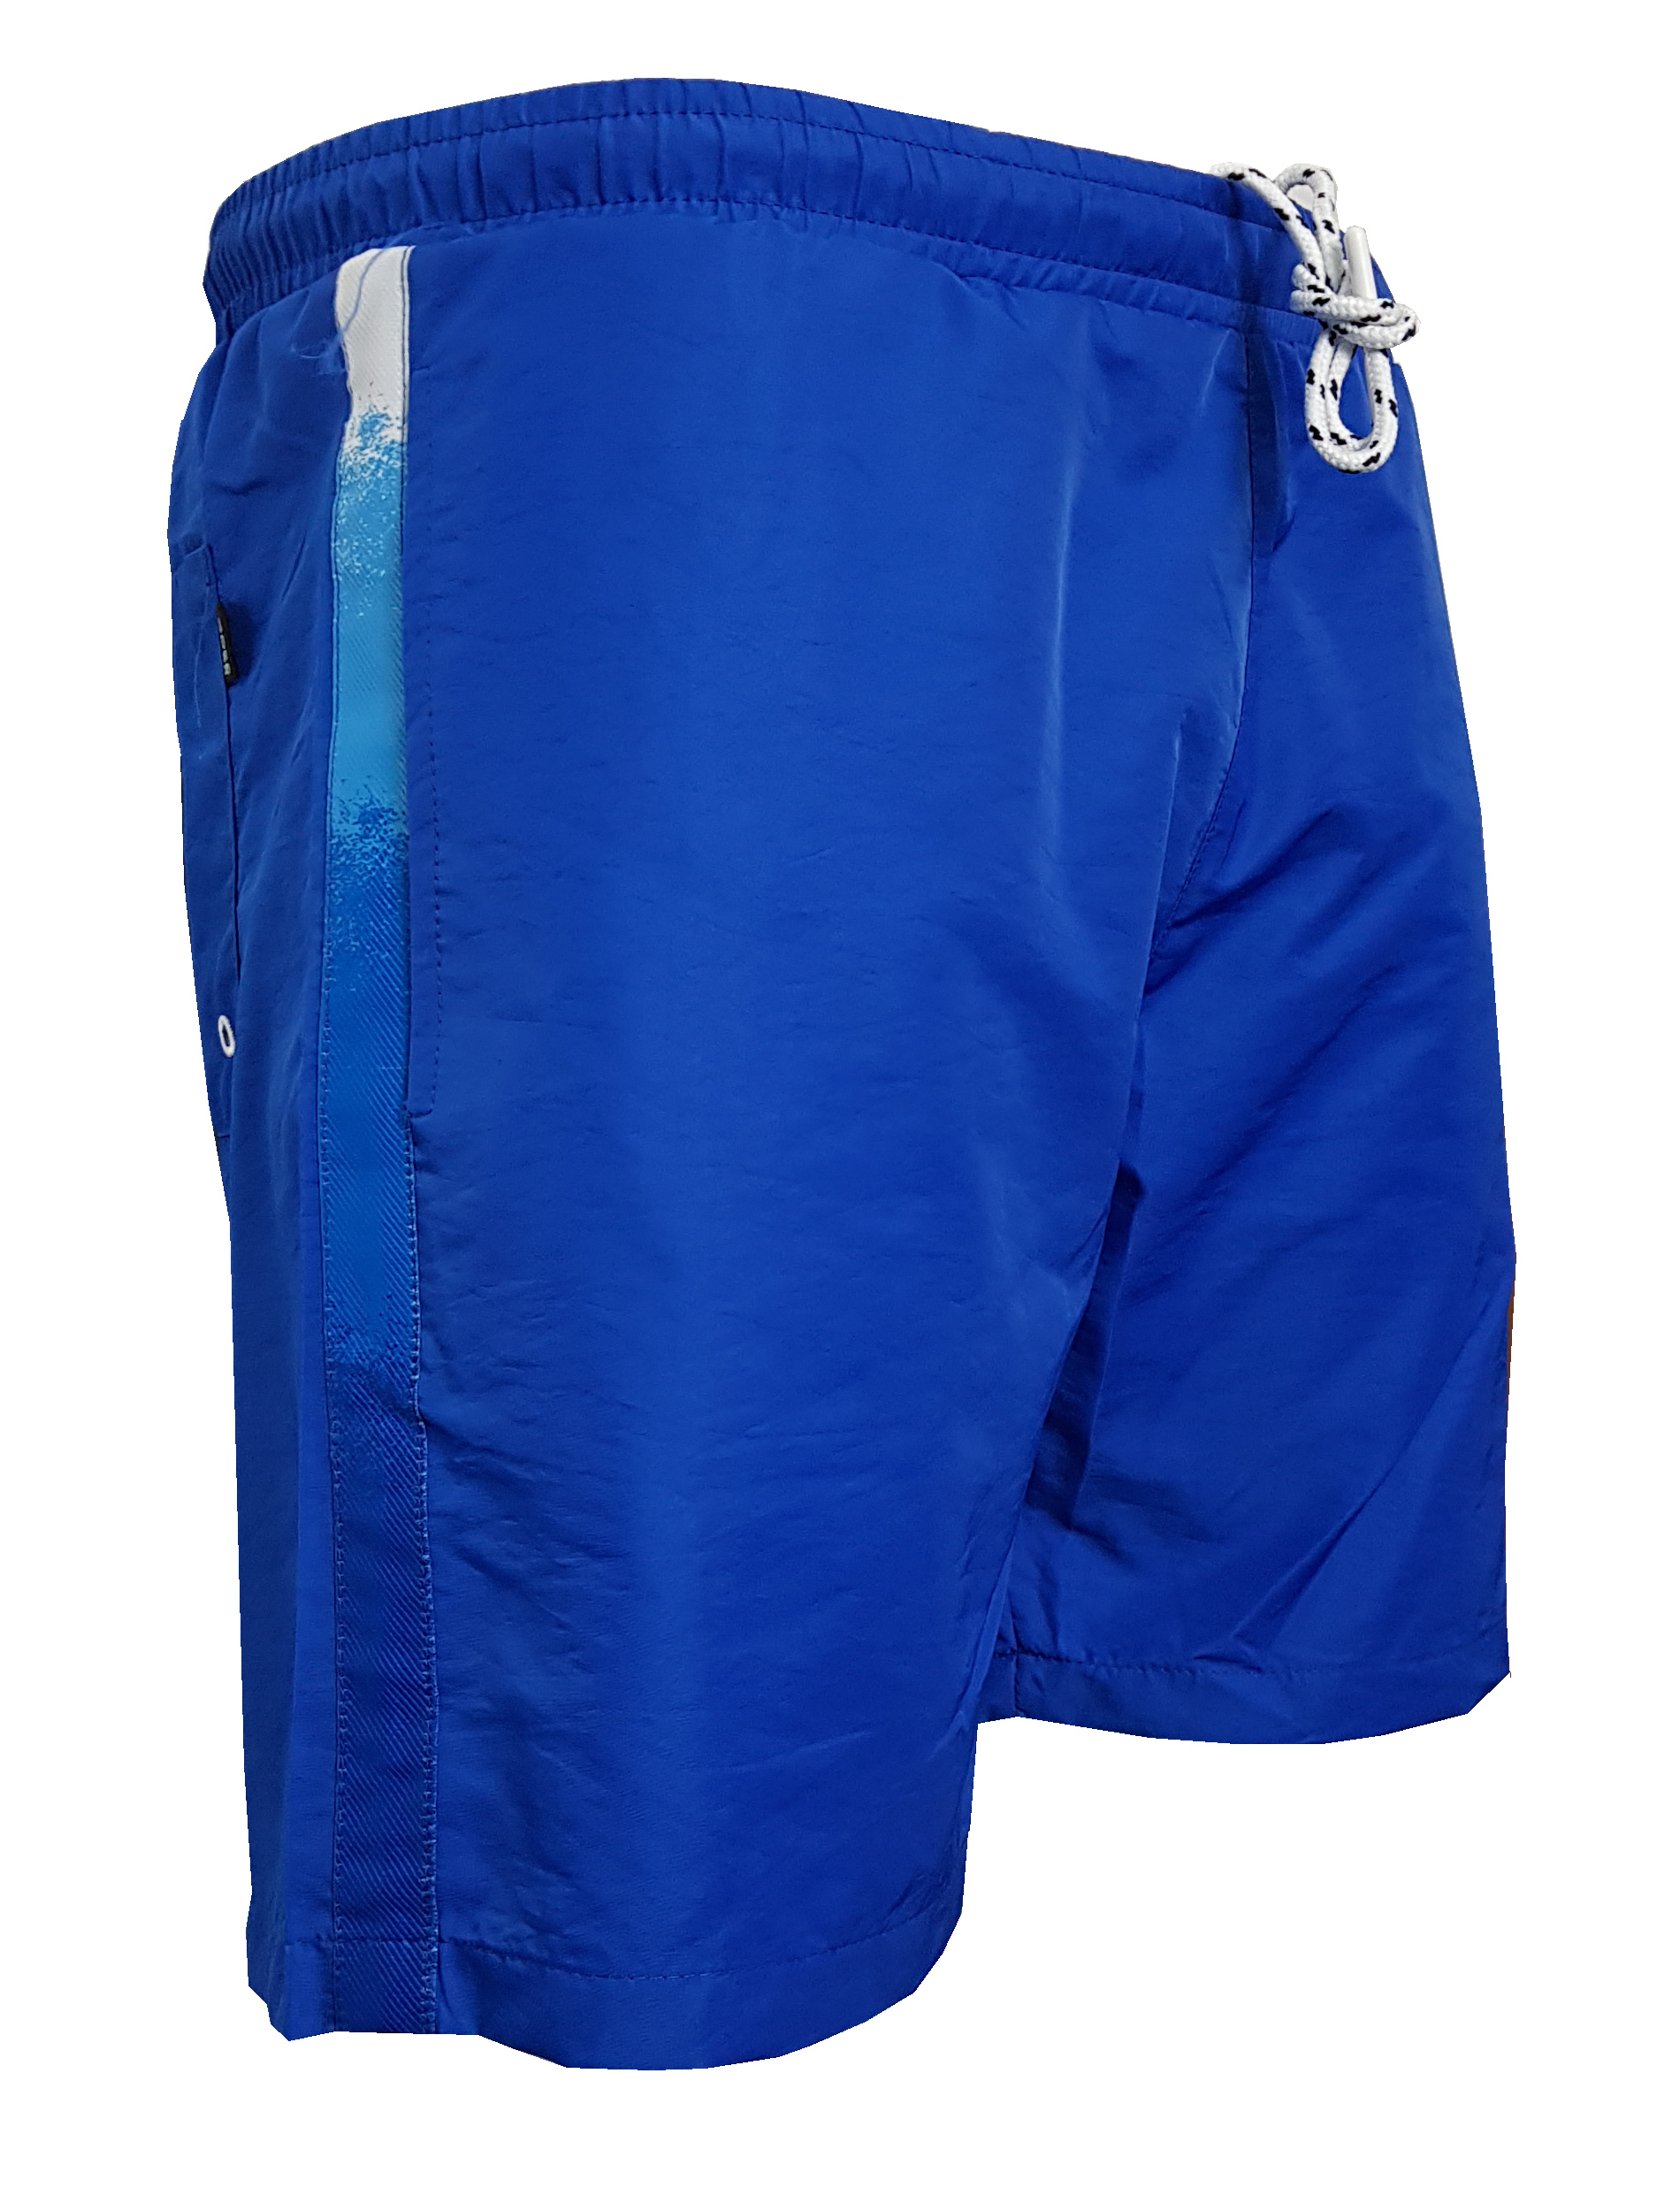 Hugo Boss Polyester Swim Shorts in Royal Blue - INTOTO7 Menswear